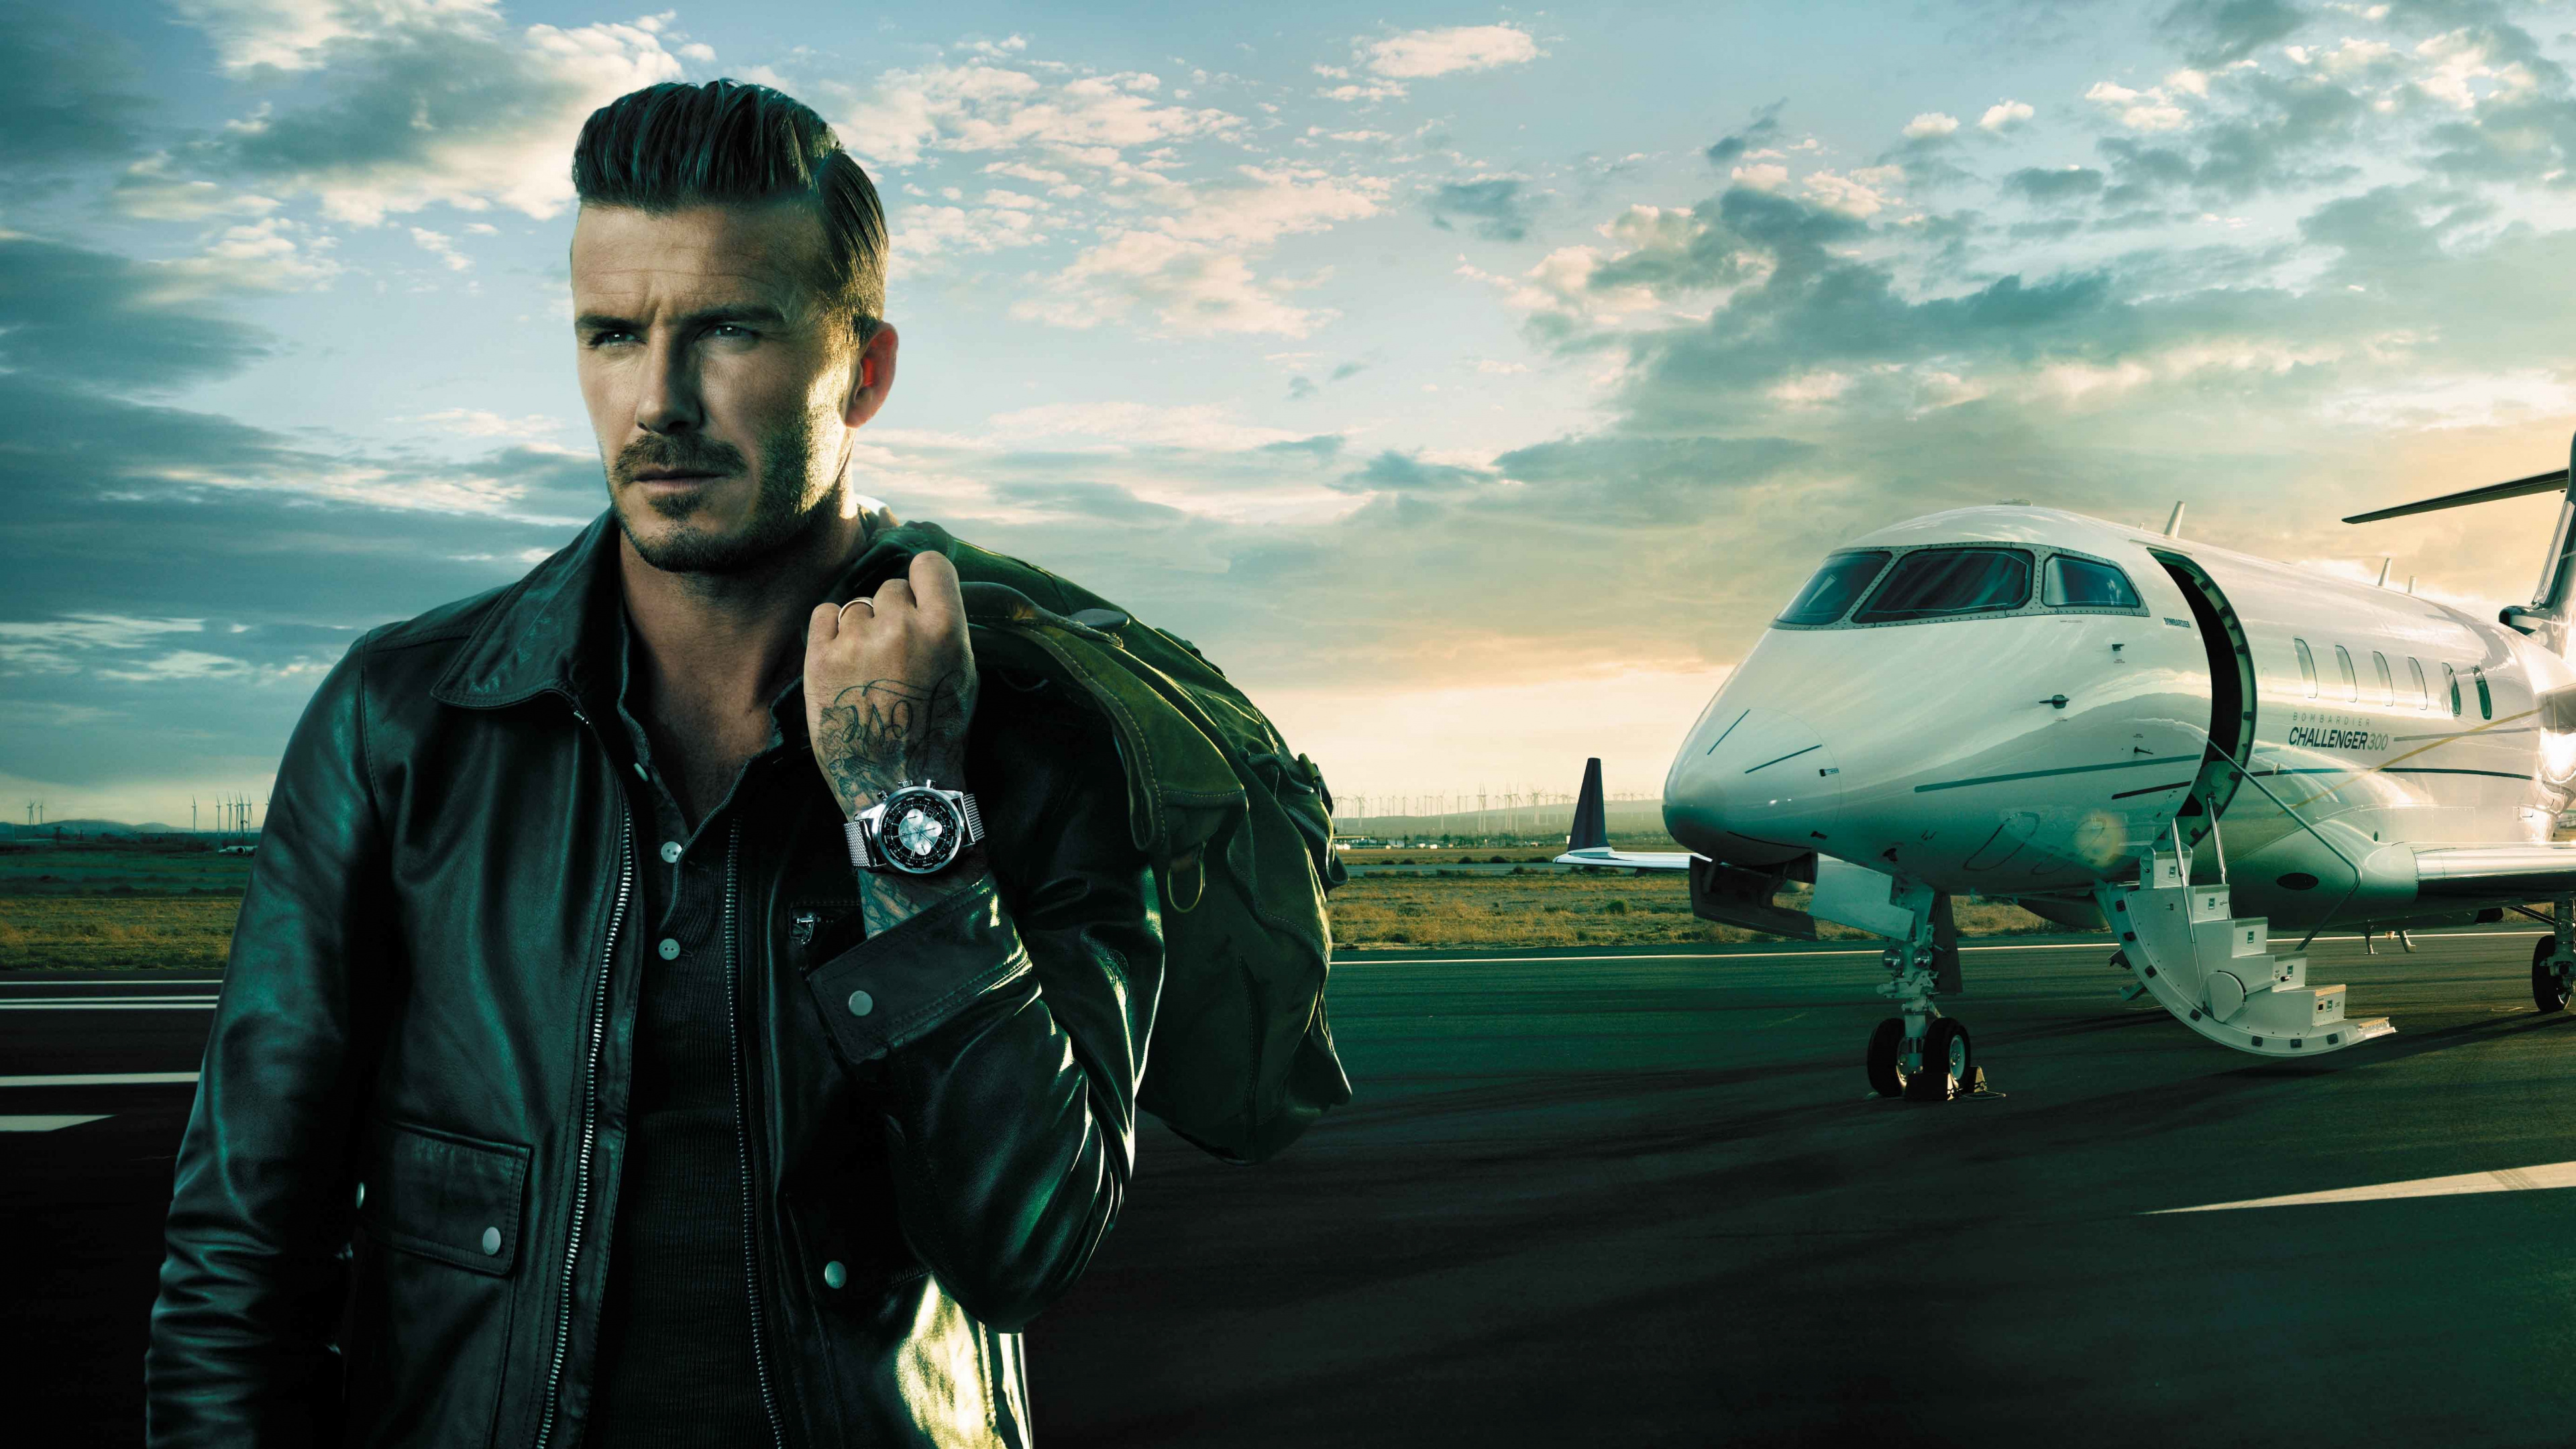 David Beckham, Breitling SA, Génie Aérospatial, Avion, Air Voyage. Wallpaper in 3840x2160 Resolution